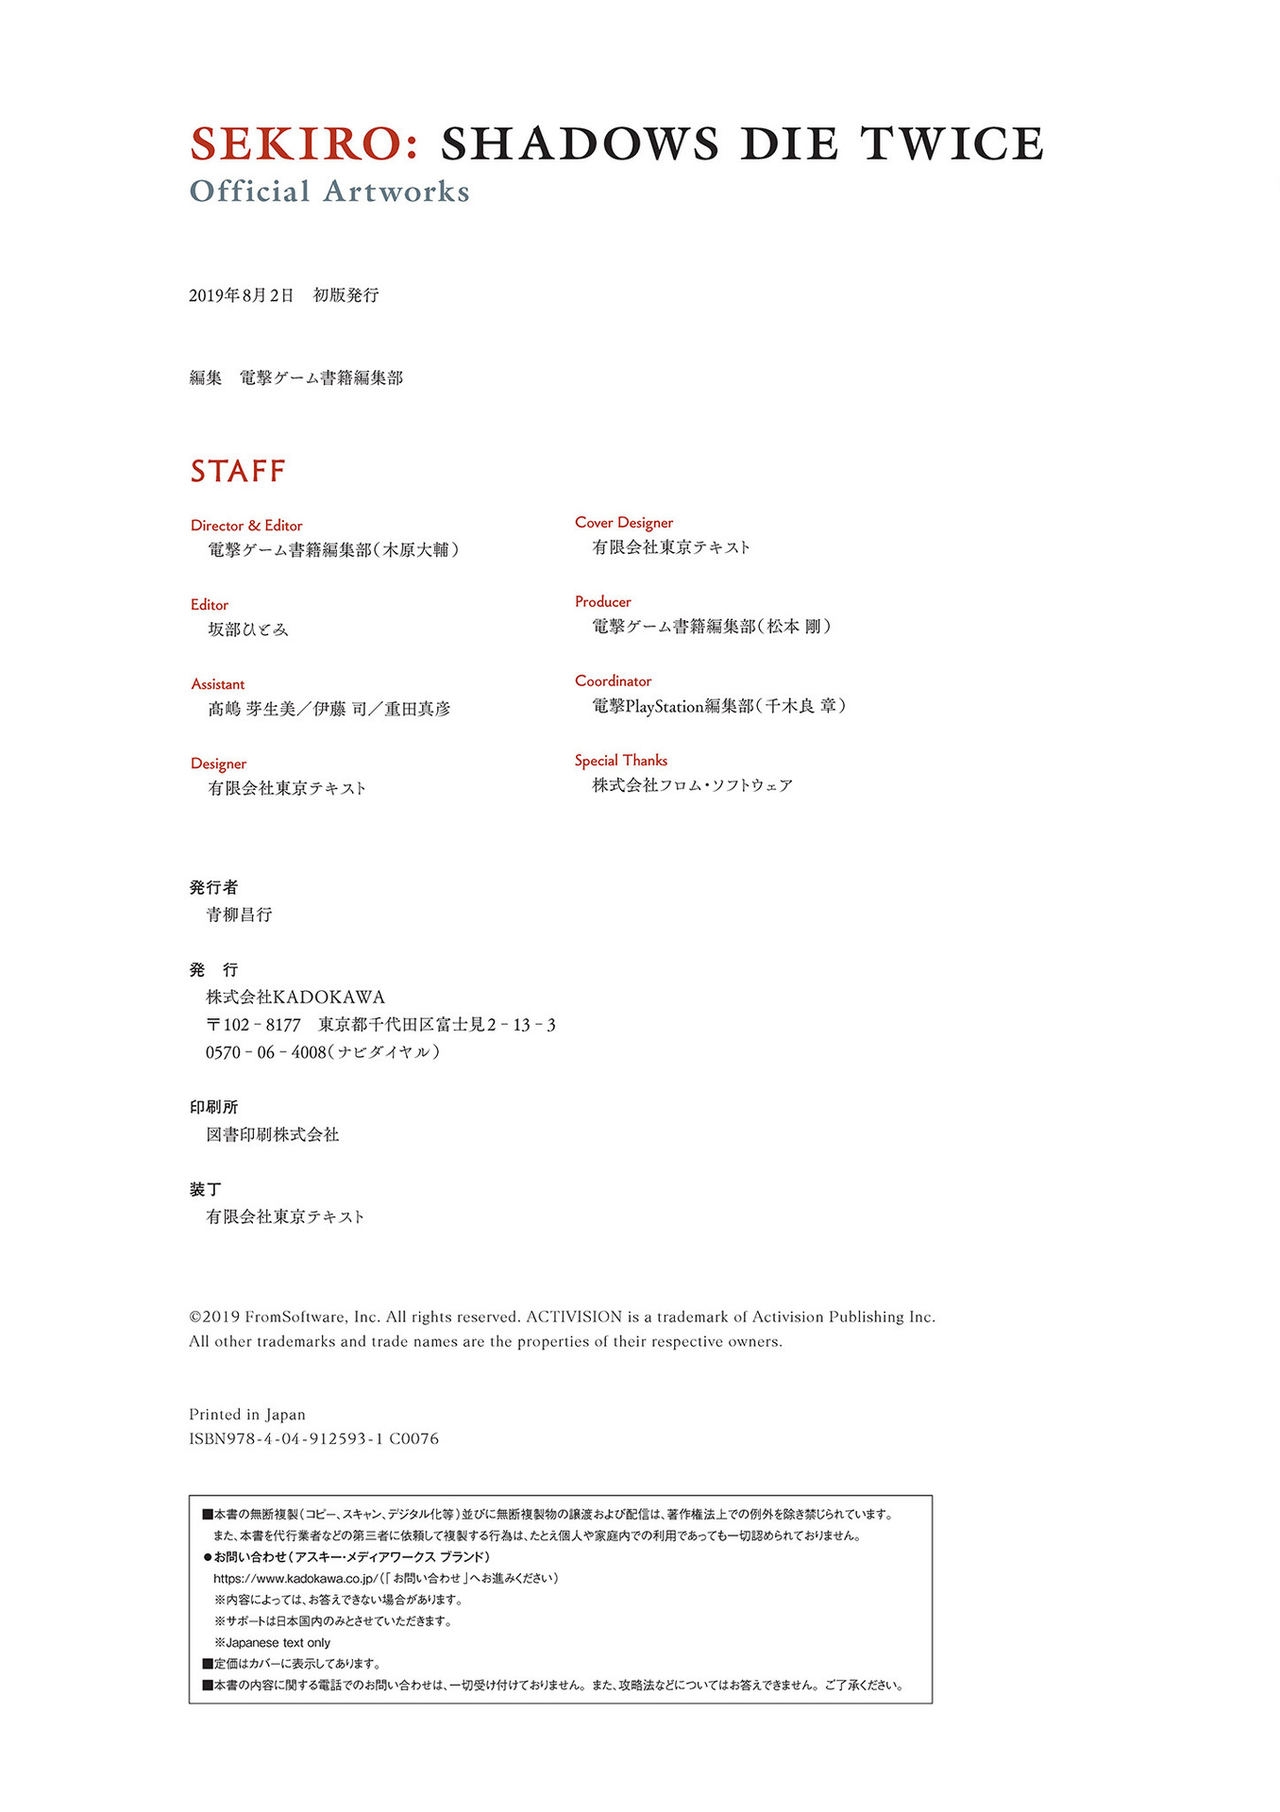 SEKIRO - SHADOWS DIE TWICE Official Artworks 214